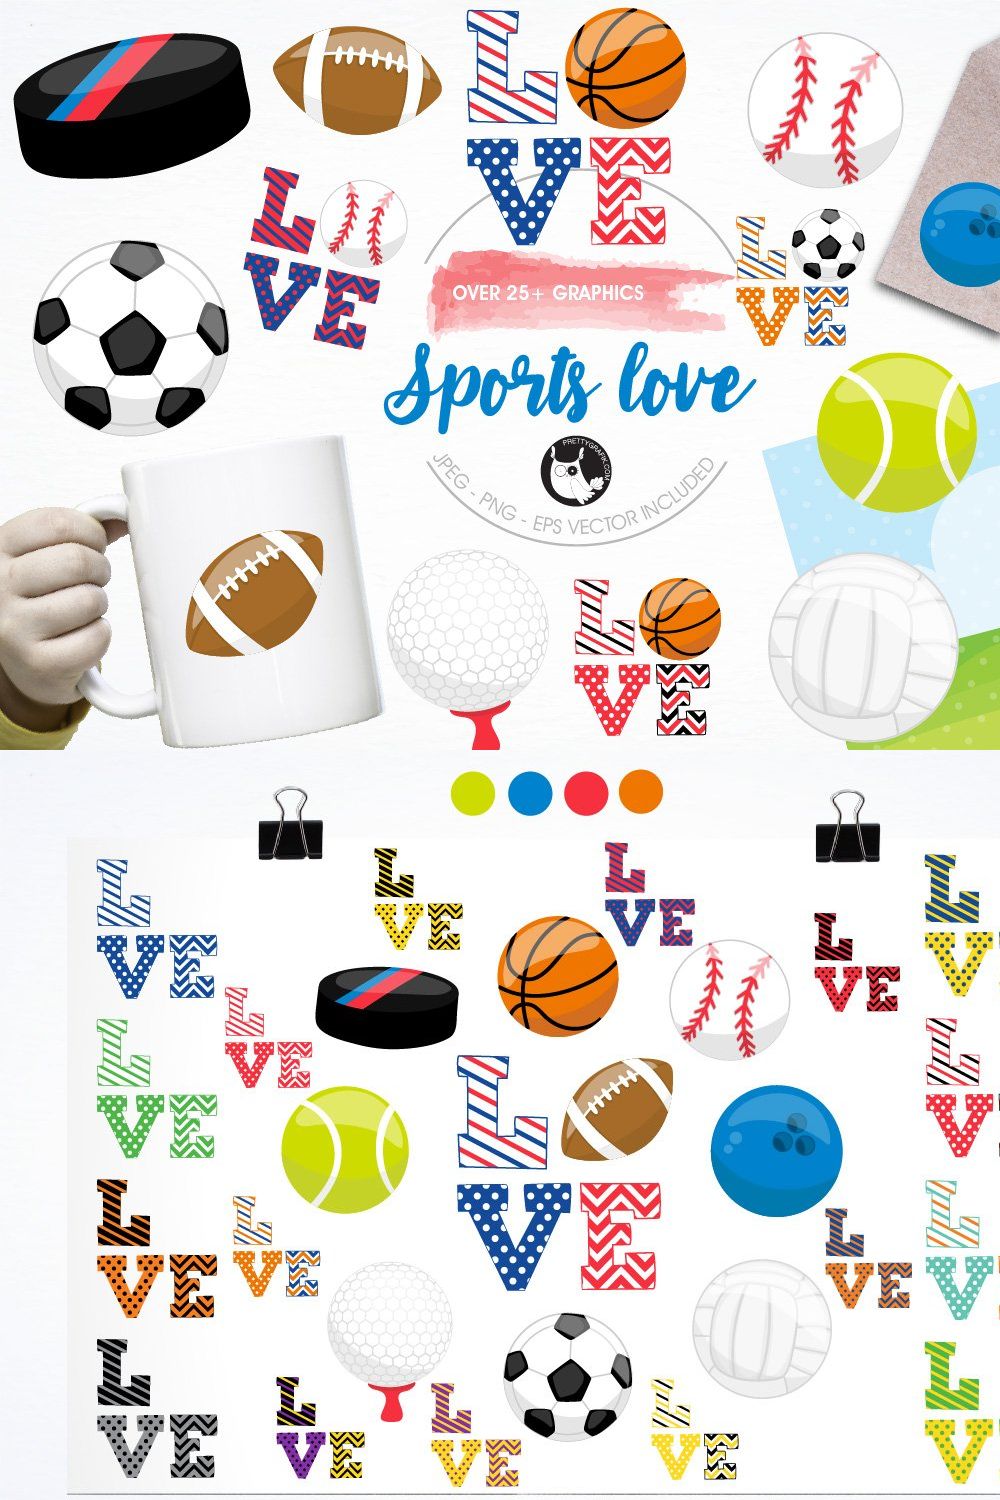 Sports love illustration pack pinterest preview image.